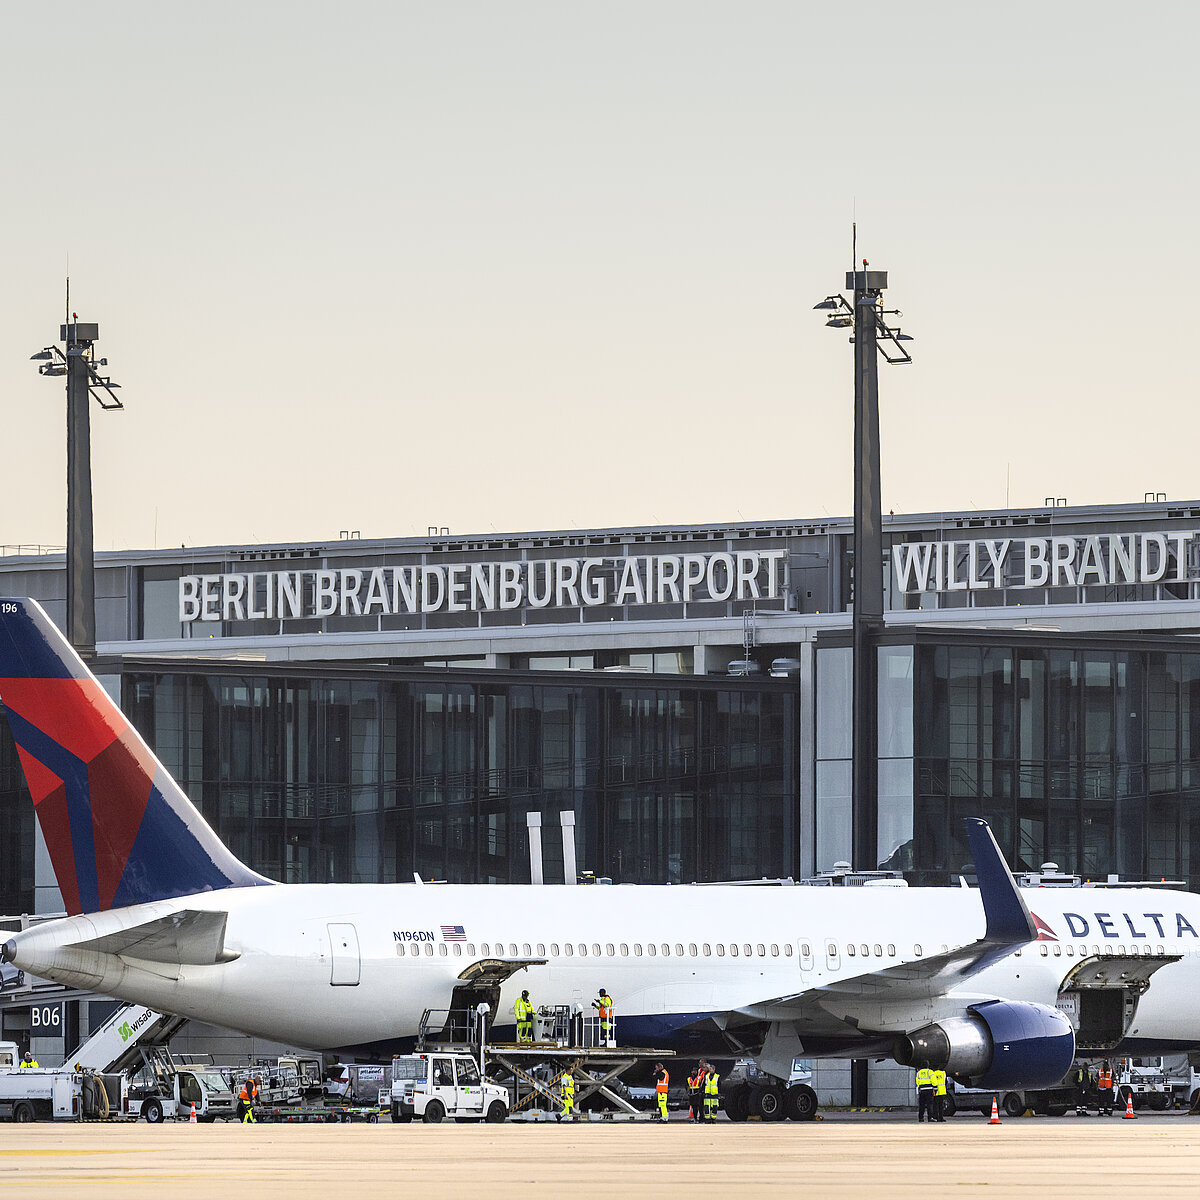 Delta Air Lines plane in front of Berlin Brandenburg Airport